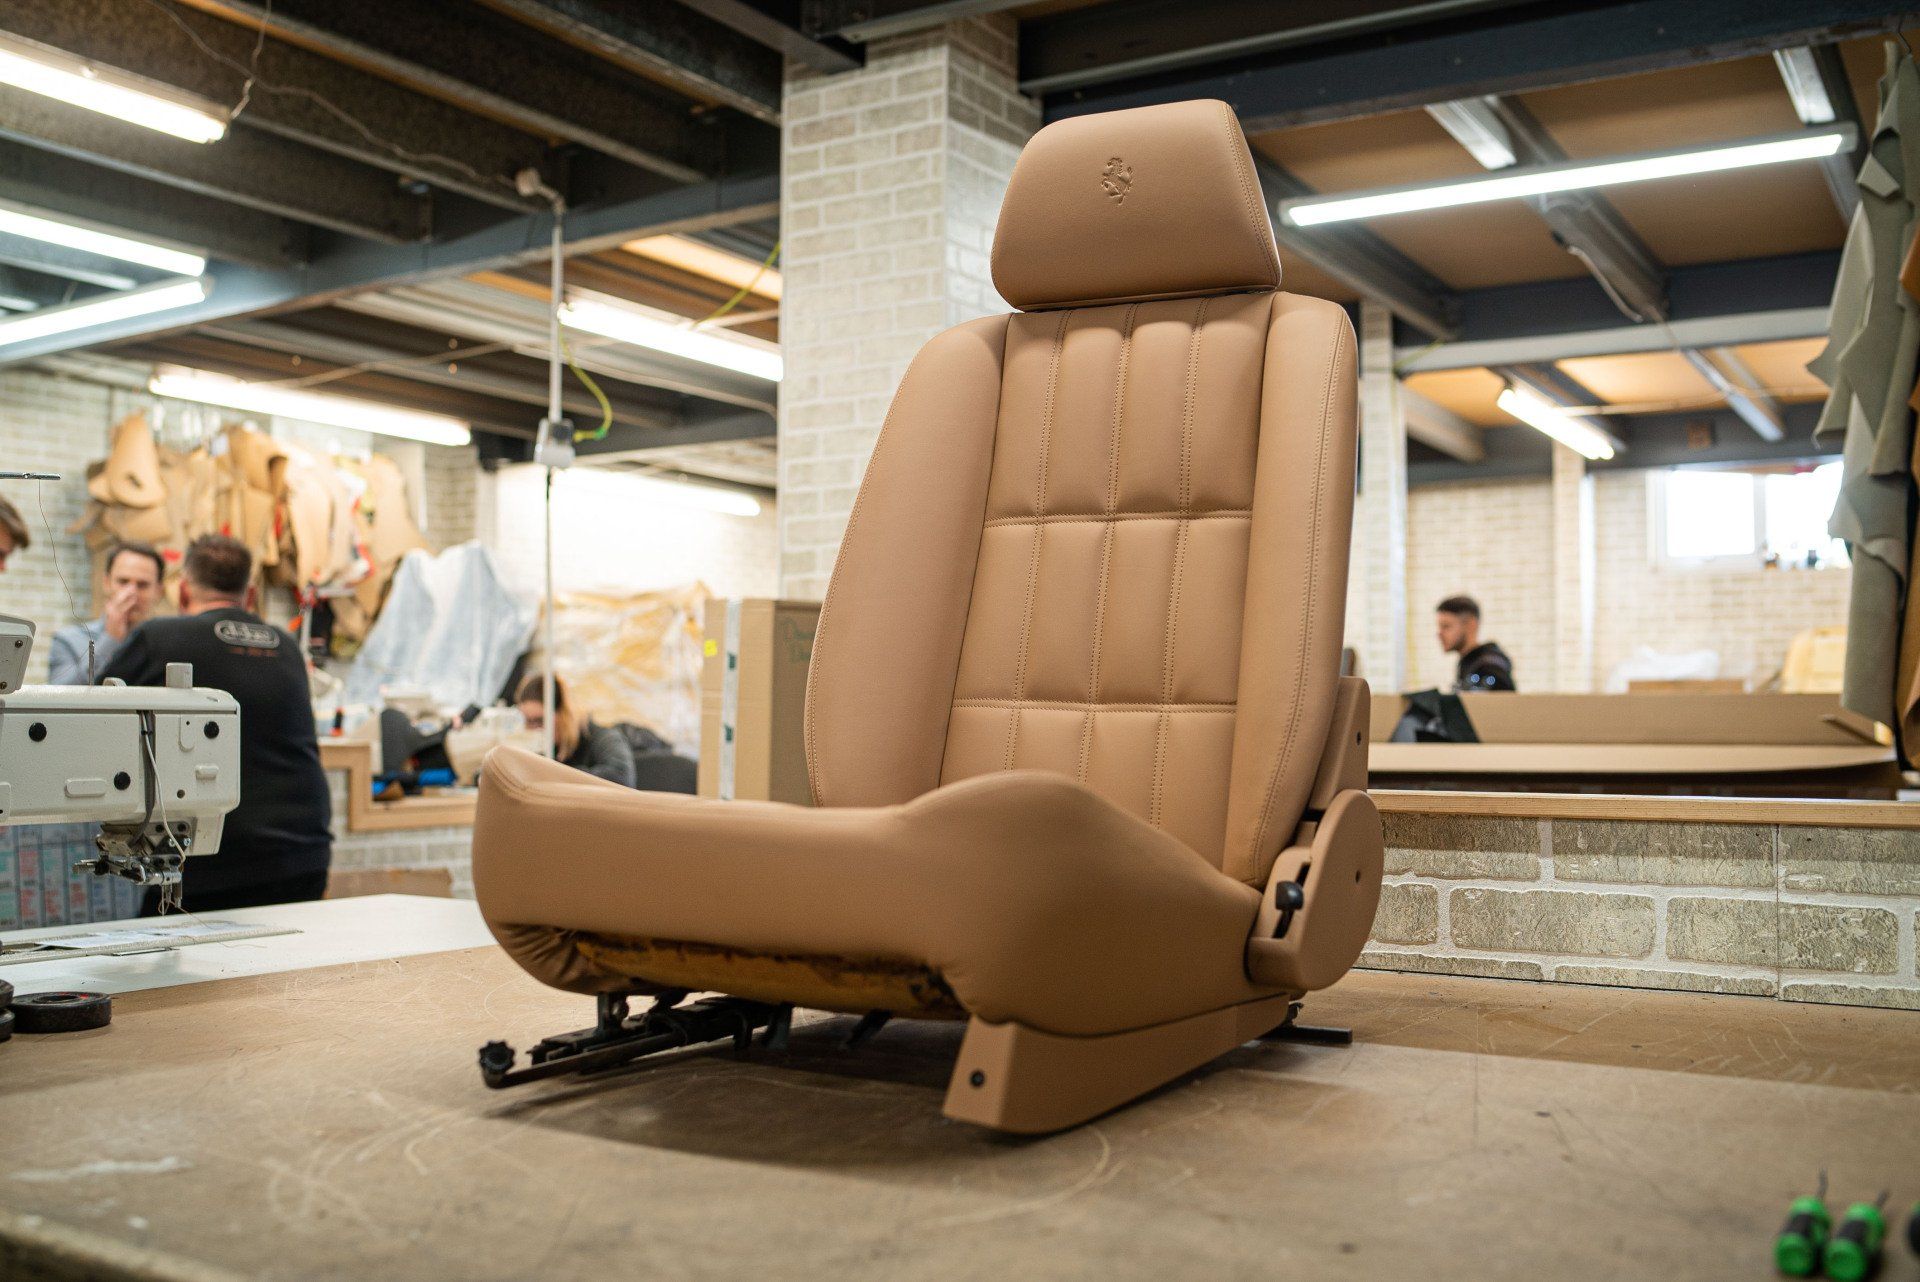 ferrari 328 seat retrim d:class automotive auto leather tan upholstery restoration repair stitch